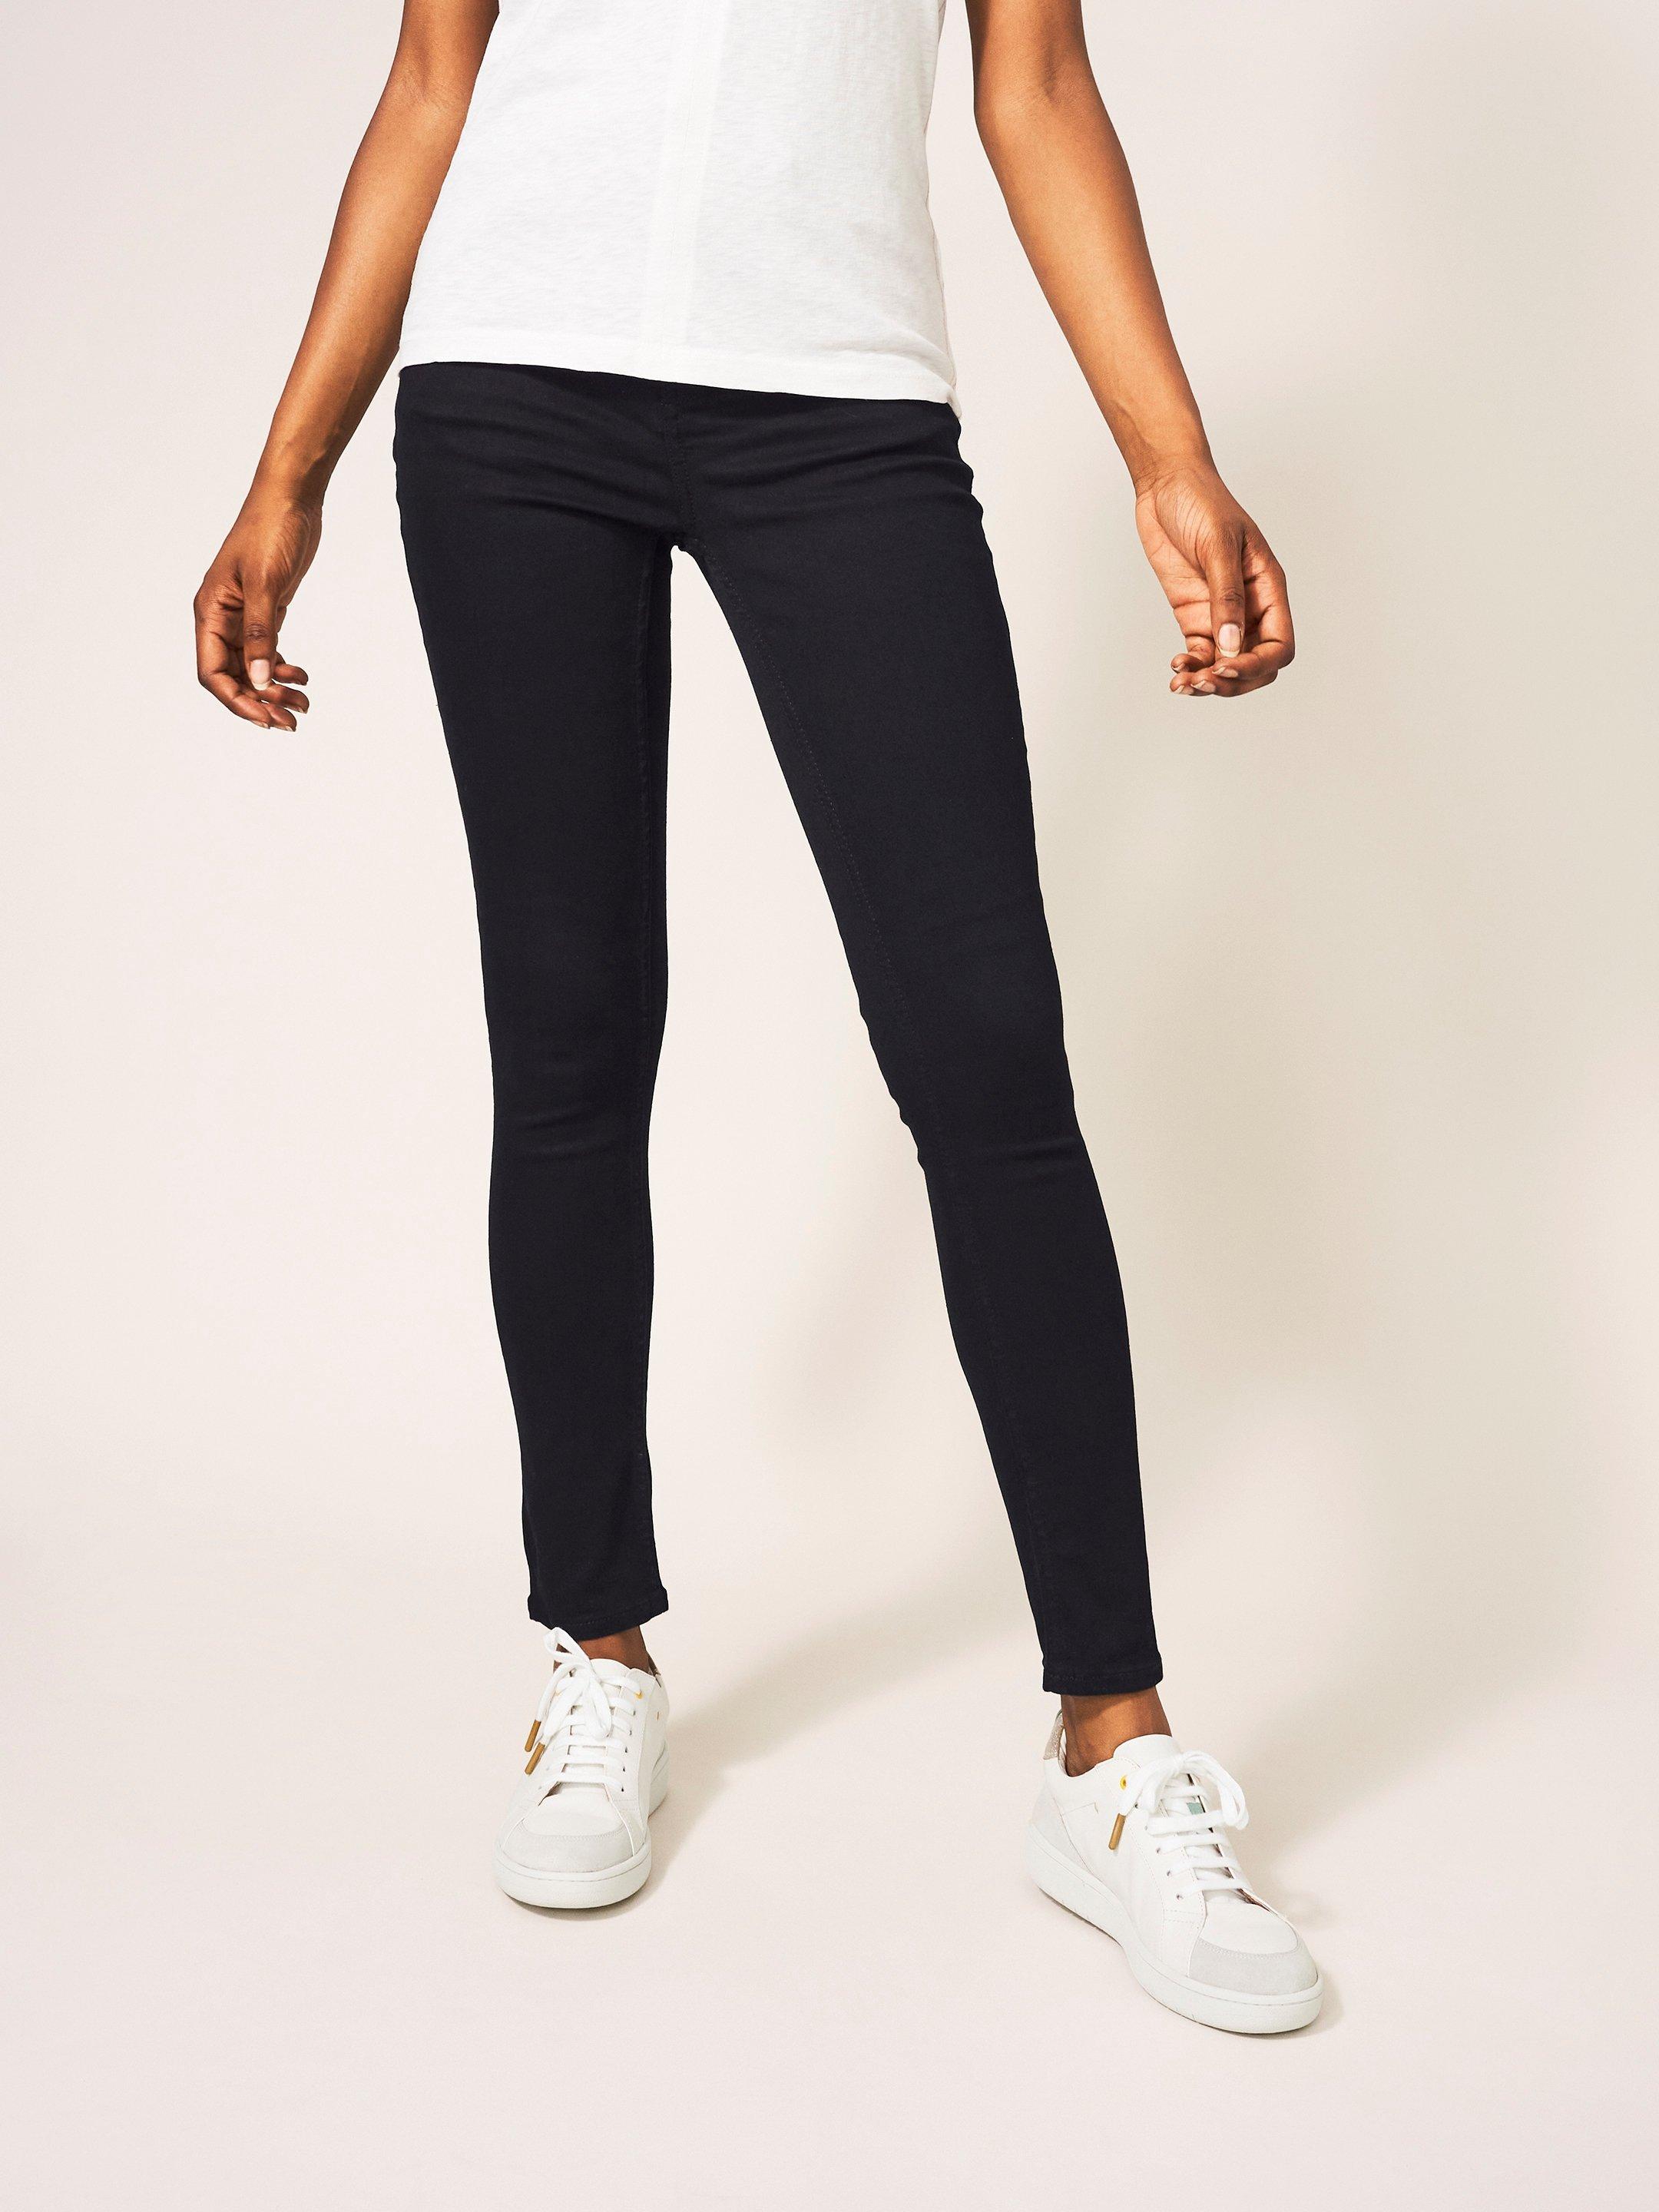 Amelia Skinny Leg Jeans in BLACK DENIM | White Stuff